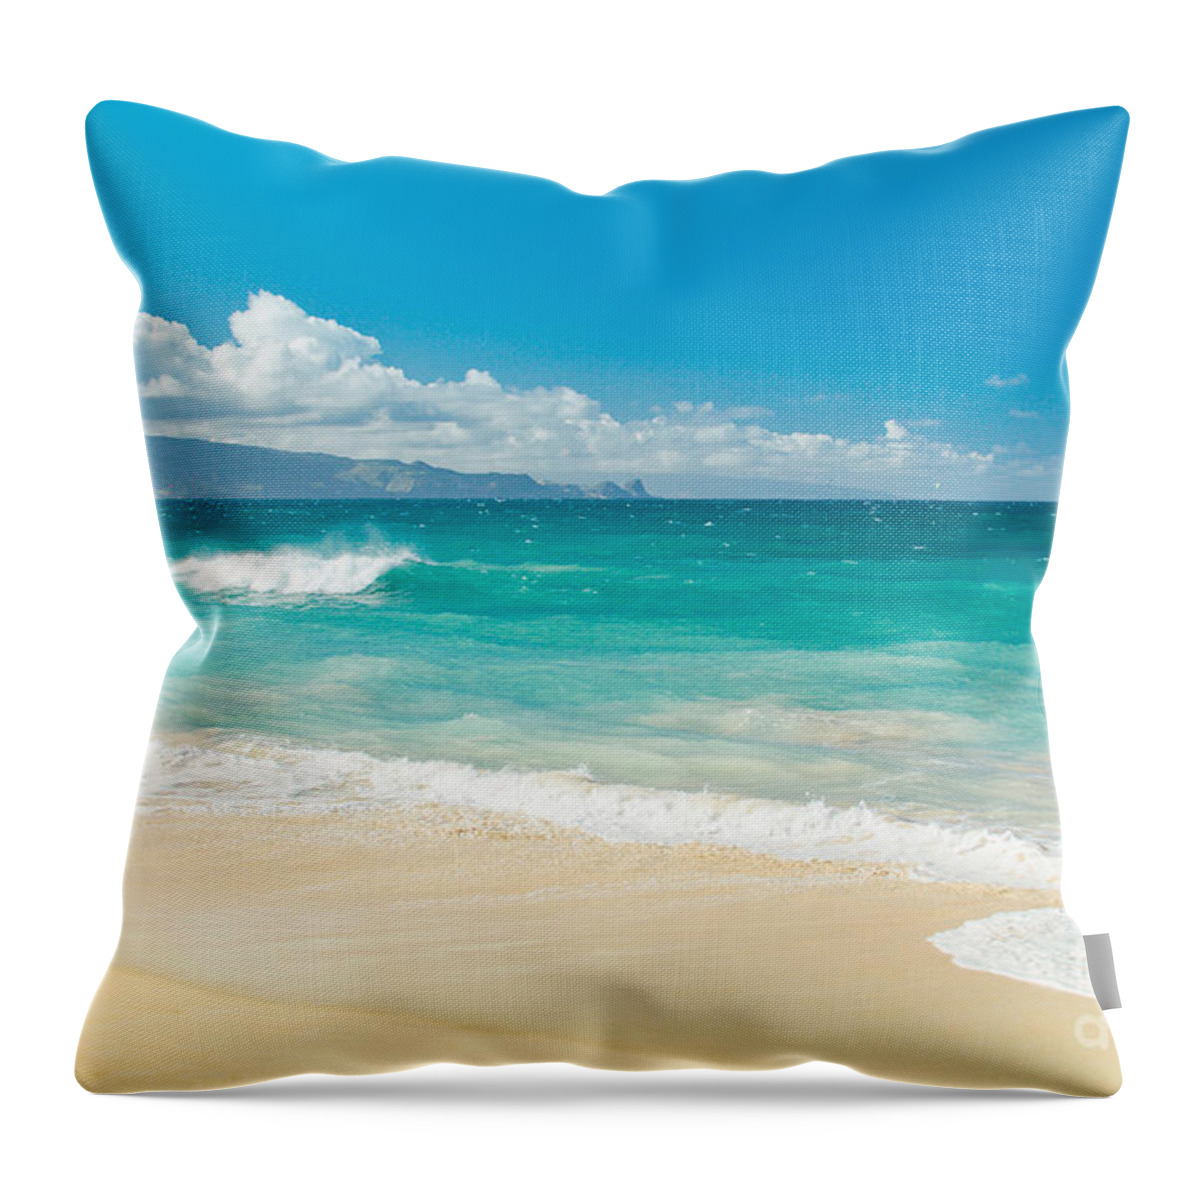 Beach Throw Pillow featuring the photograph Hawaii Beach Treasures by Sharon Mau